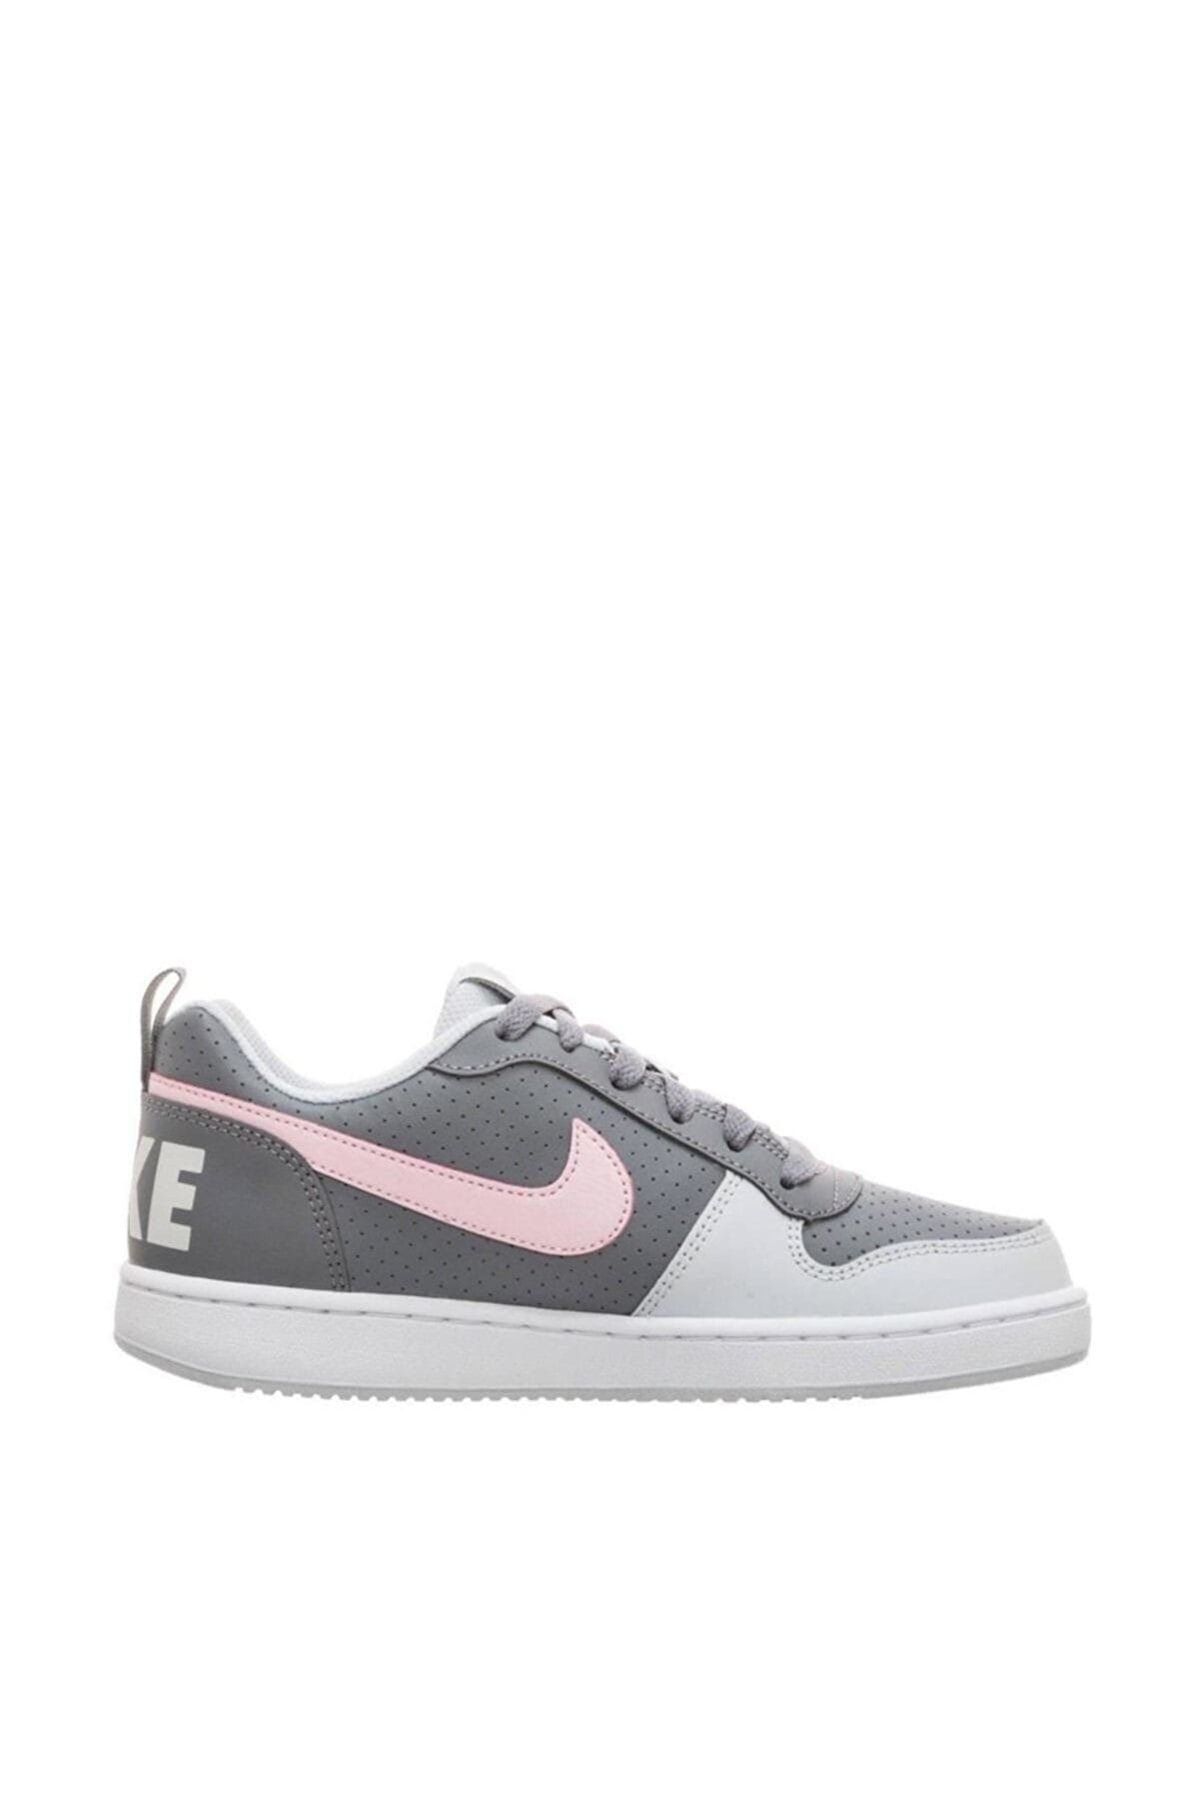 Nike 845104-008 Court Borough Low(gs) Kadın Sneaker